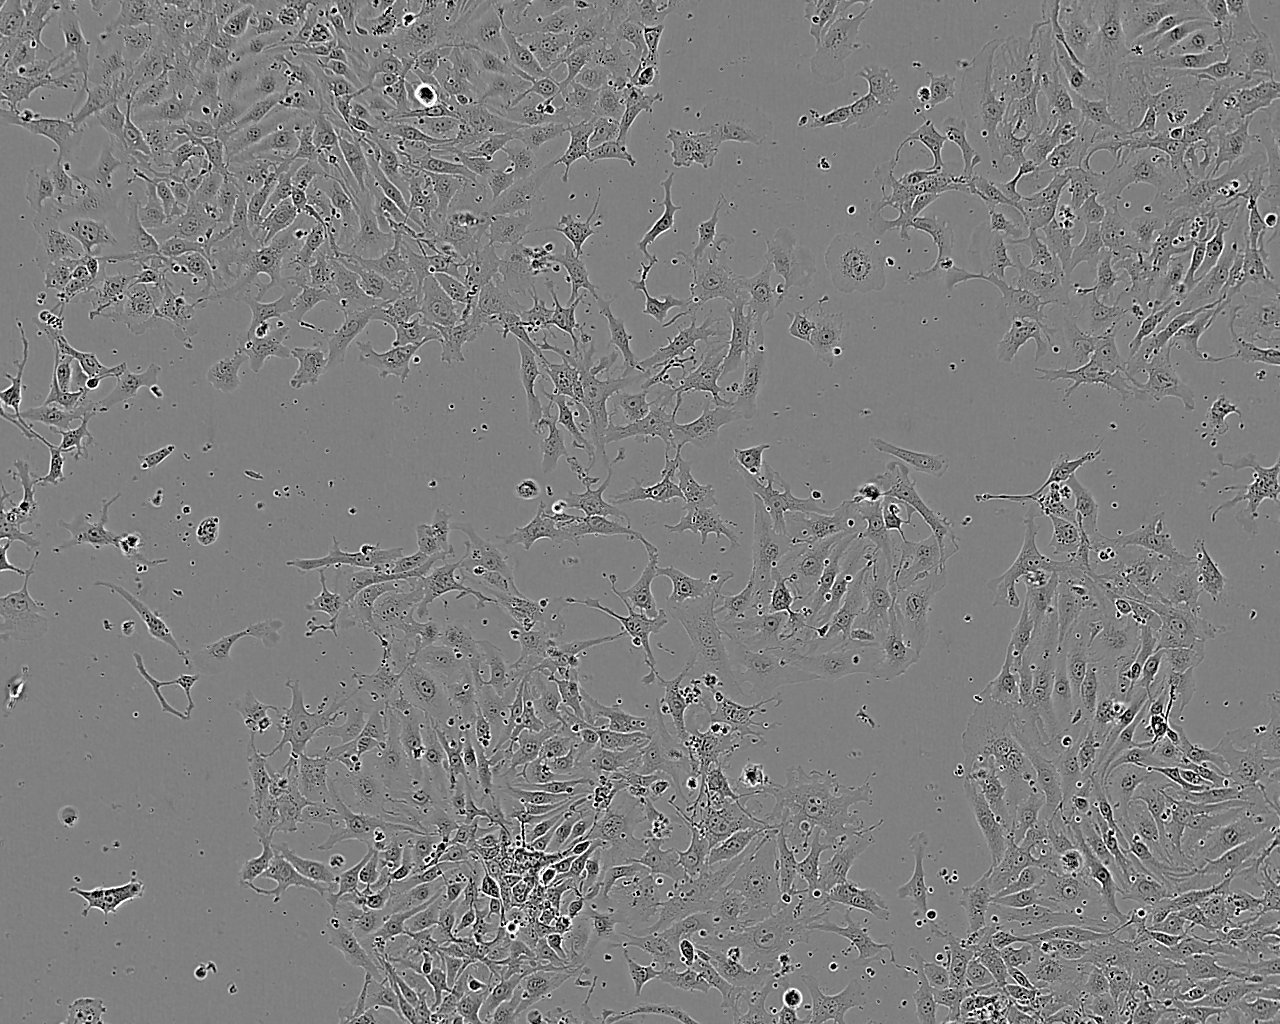 H9c2(2-1) 大鼠胚胎心肌细胞系